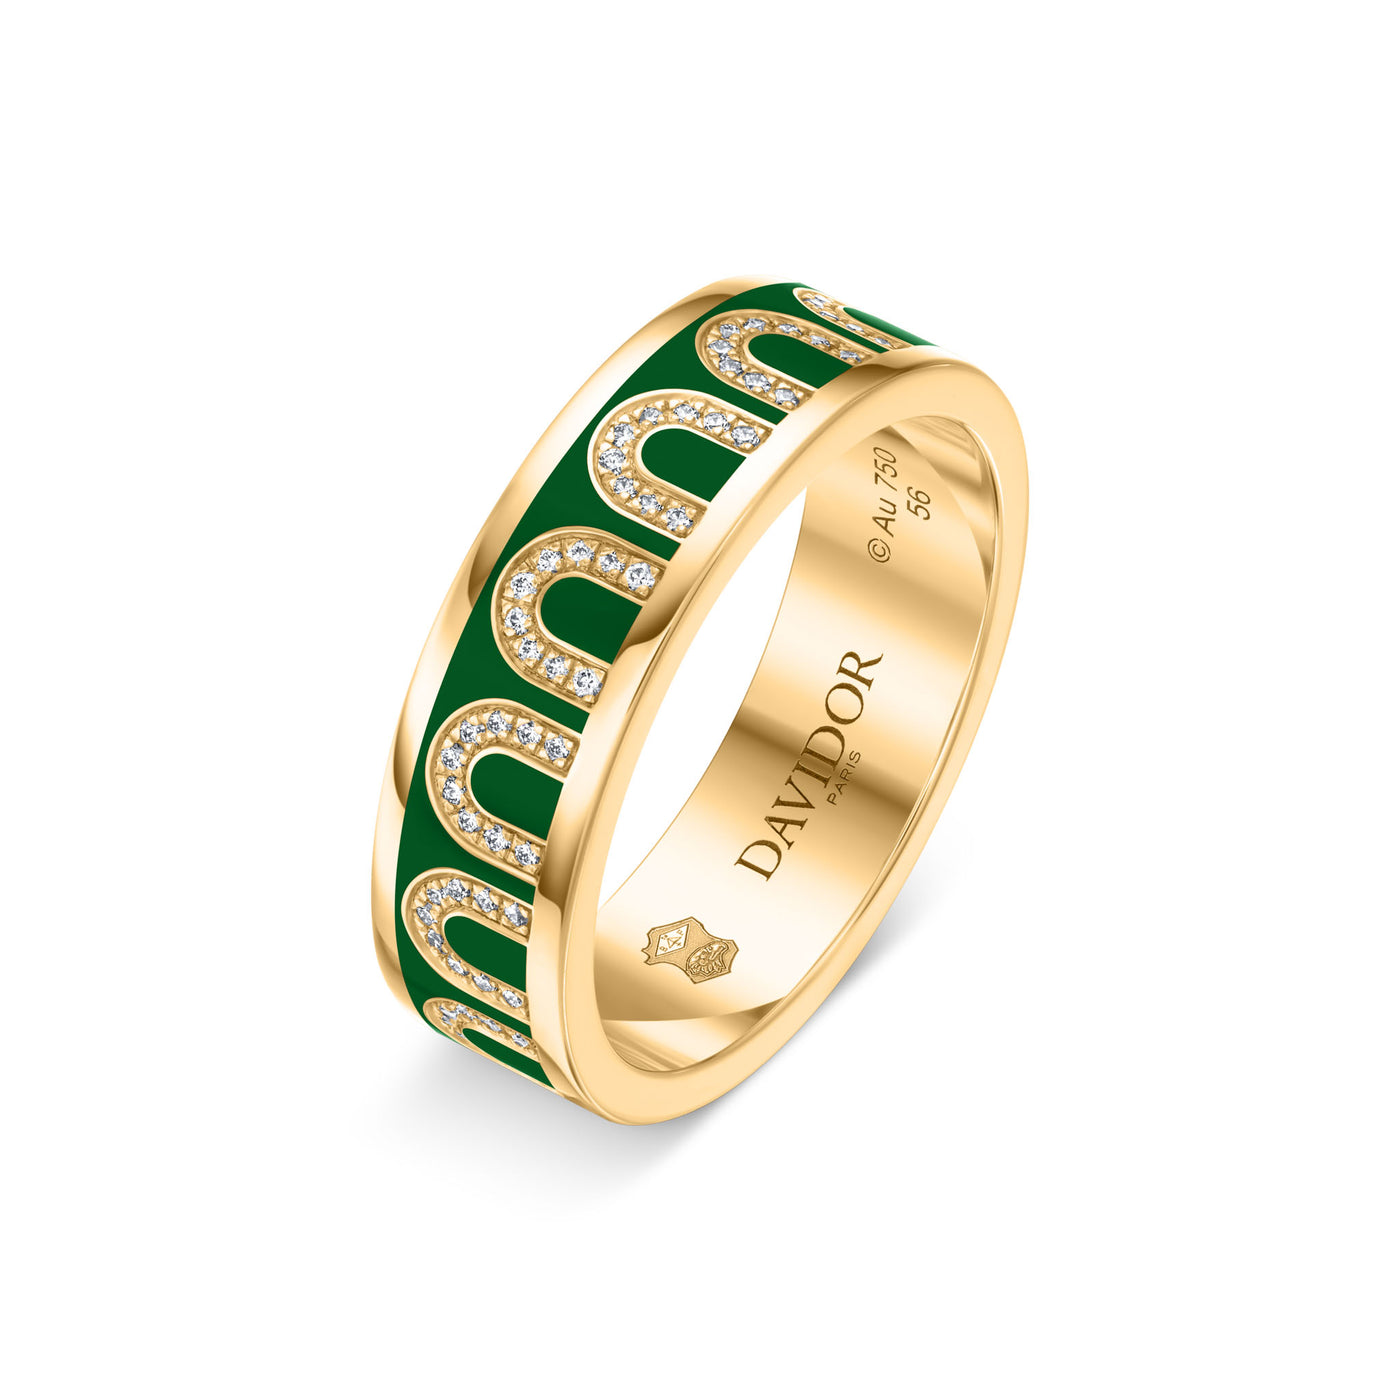 L'Arc de DAVIDOR Ring MM, 18k Yellow Gold with Palais Royal Lacquered Ceramic and Arcade Diamonds - DAVIDOR